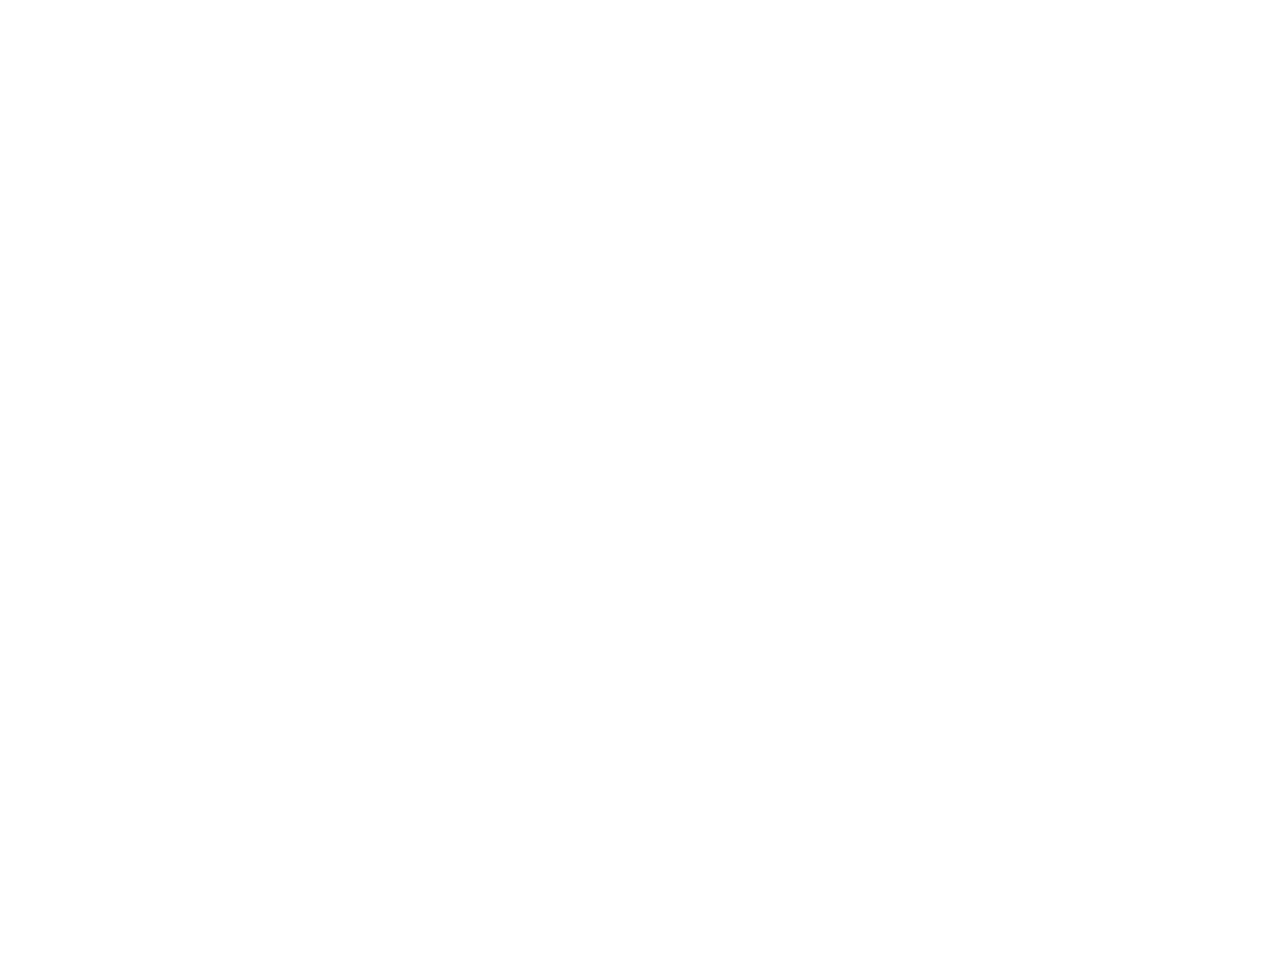 Willbeatz 's logo